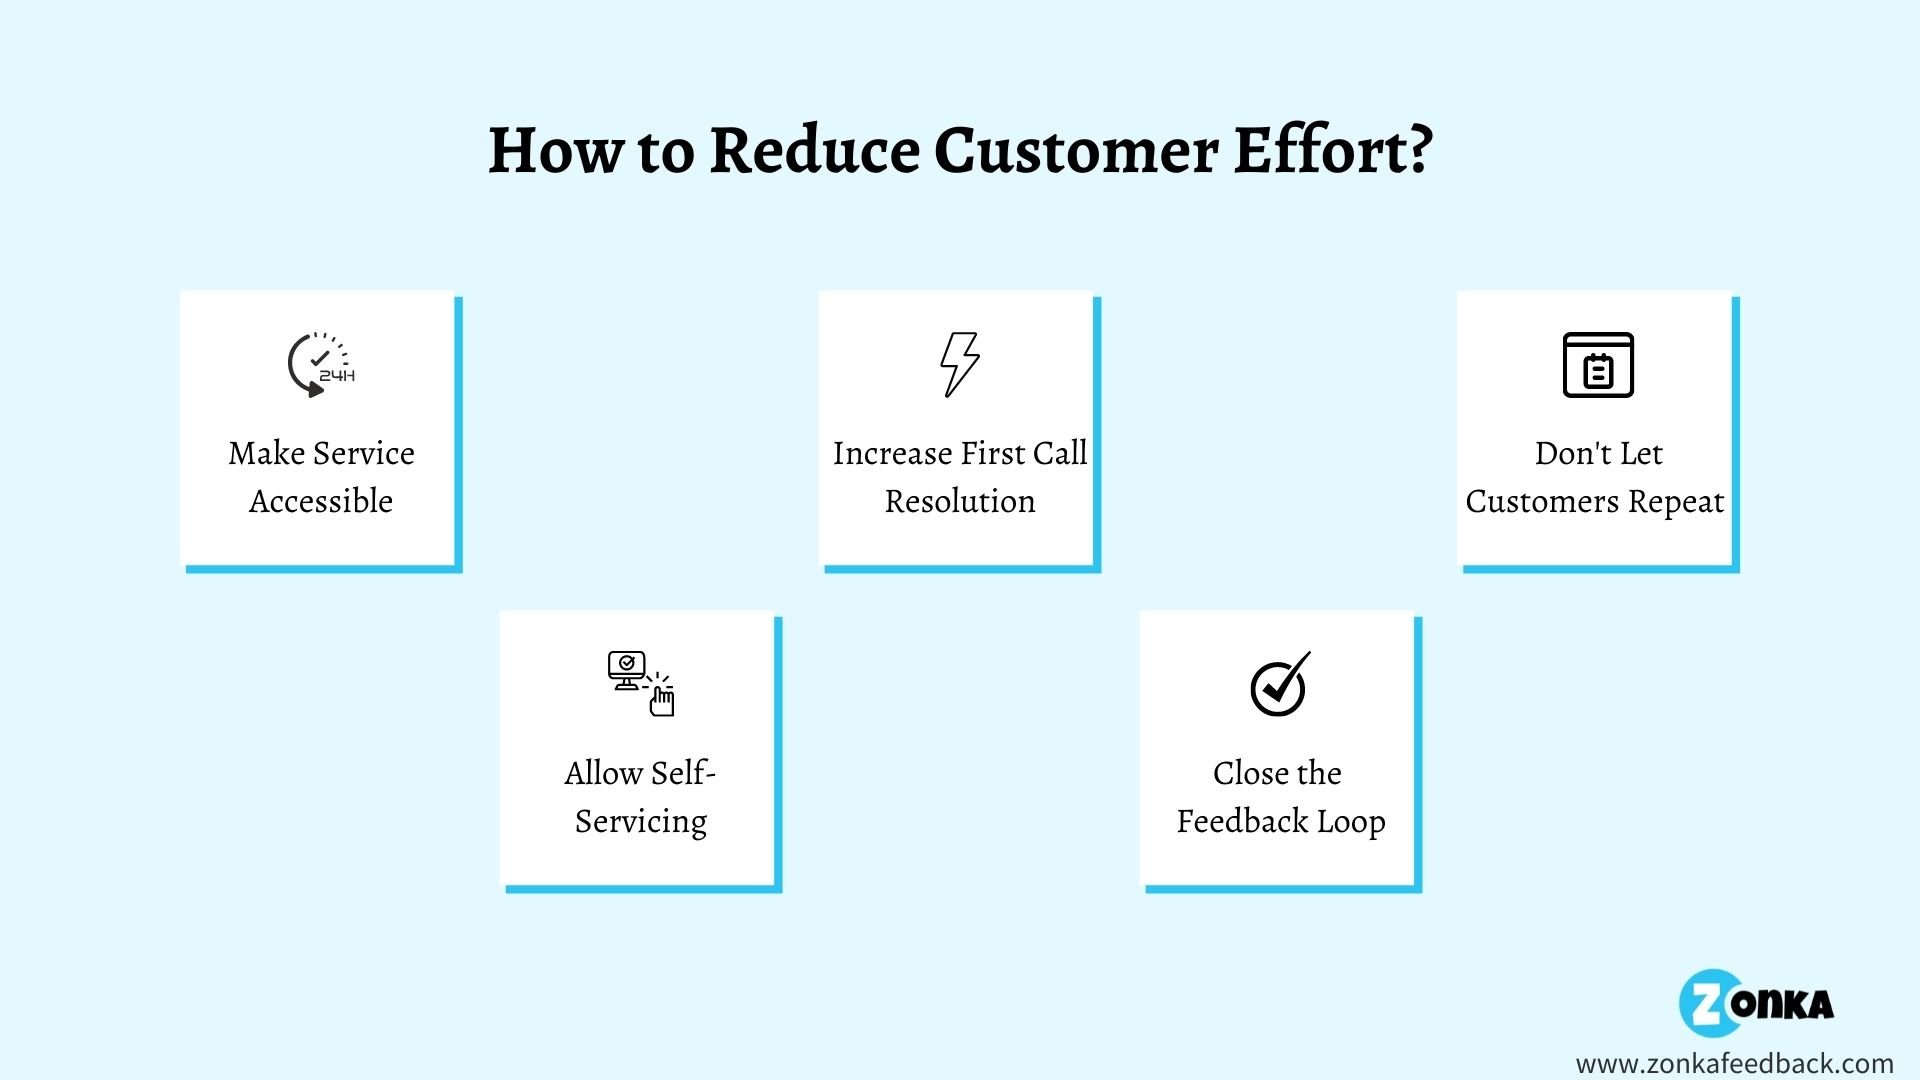 Ways to Reduce Customer Effort